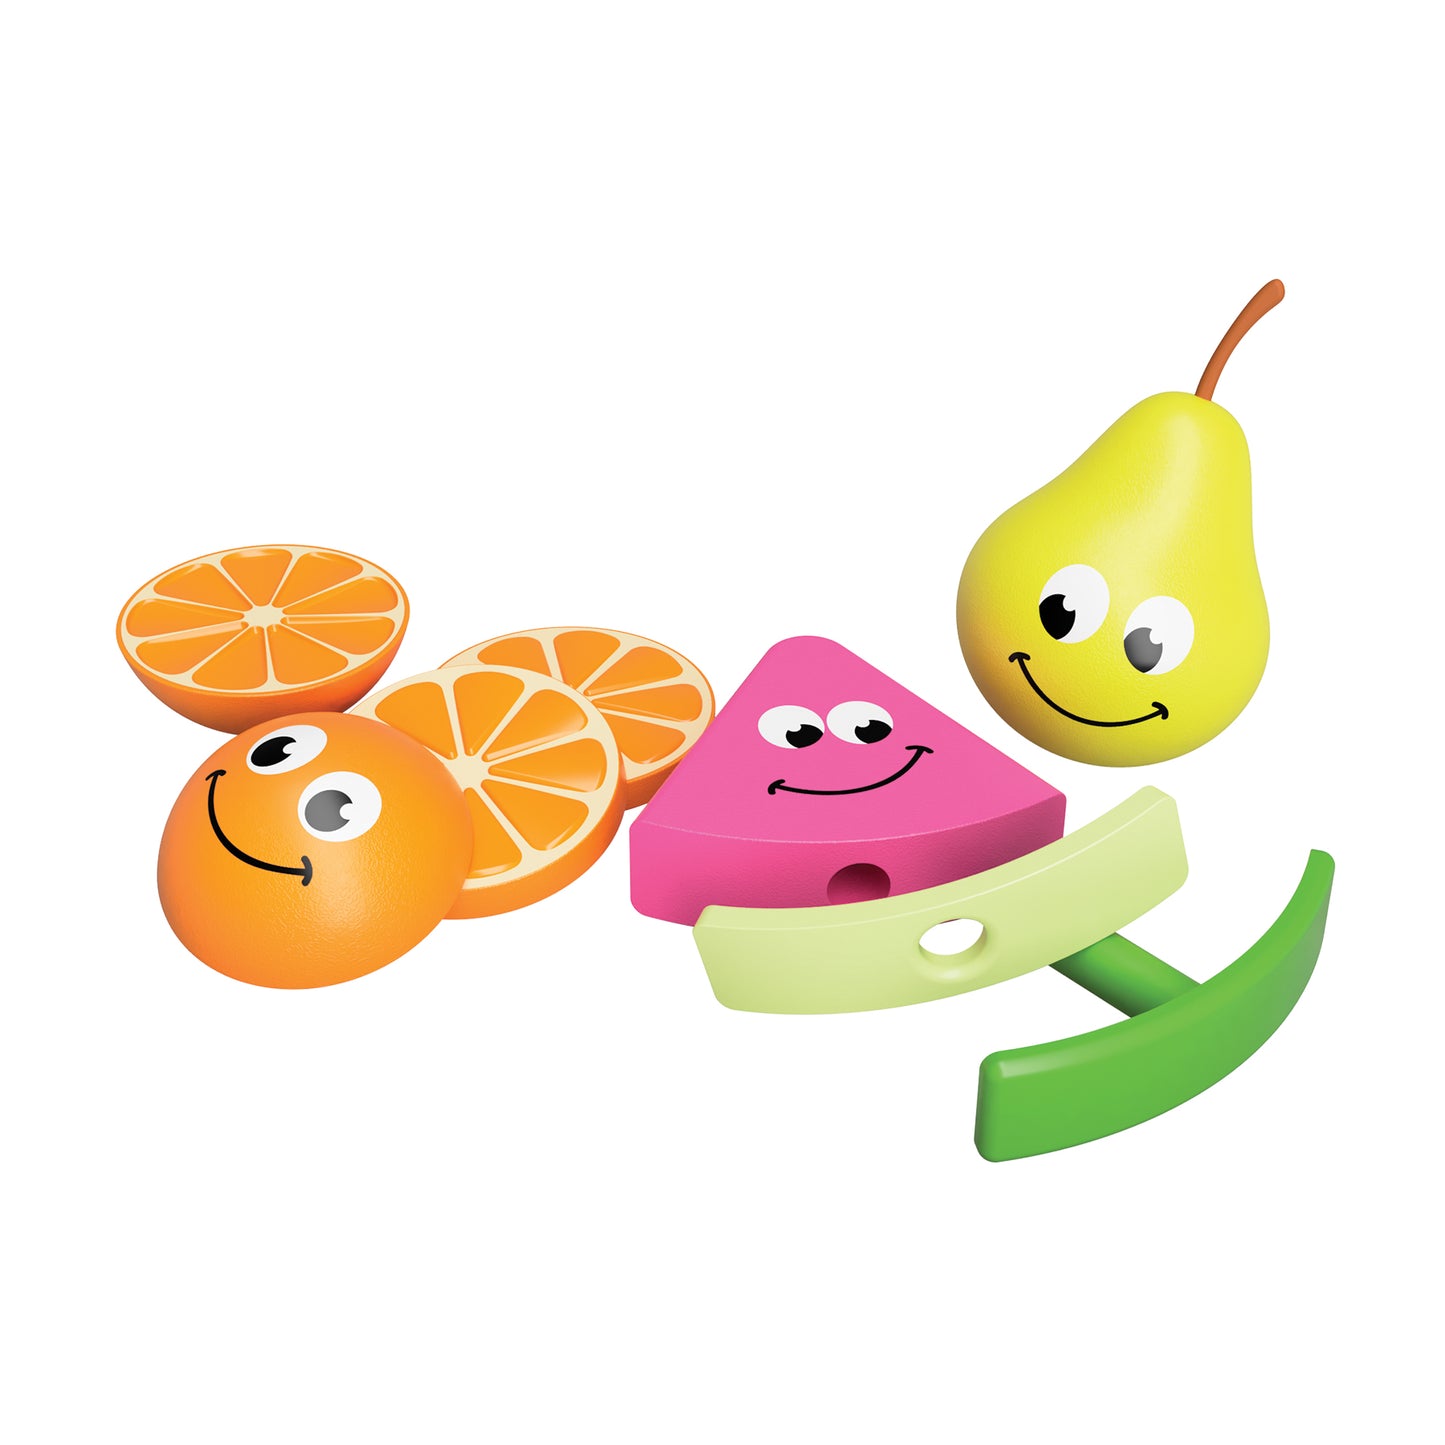 Fruit friends, puzzle sonajero